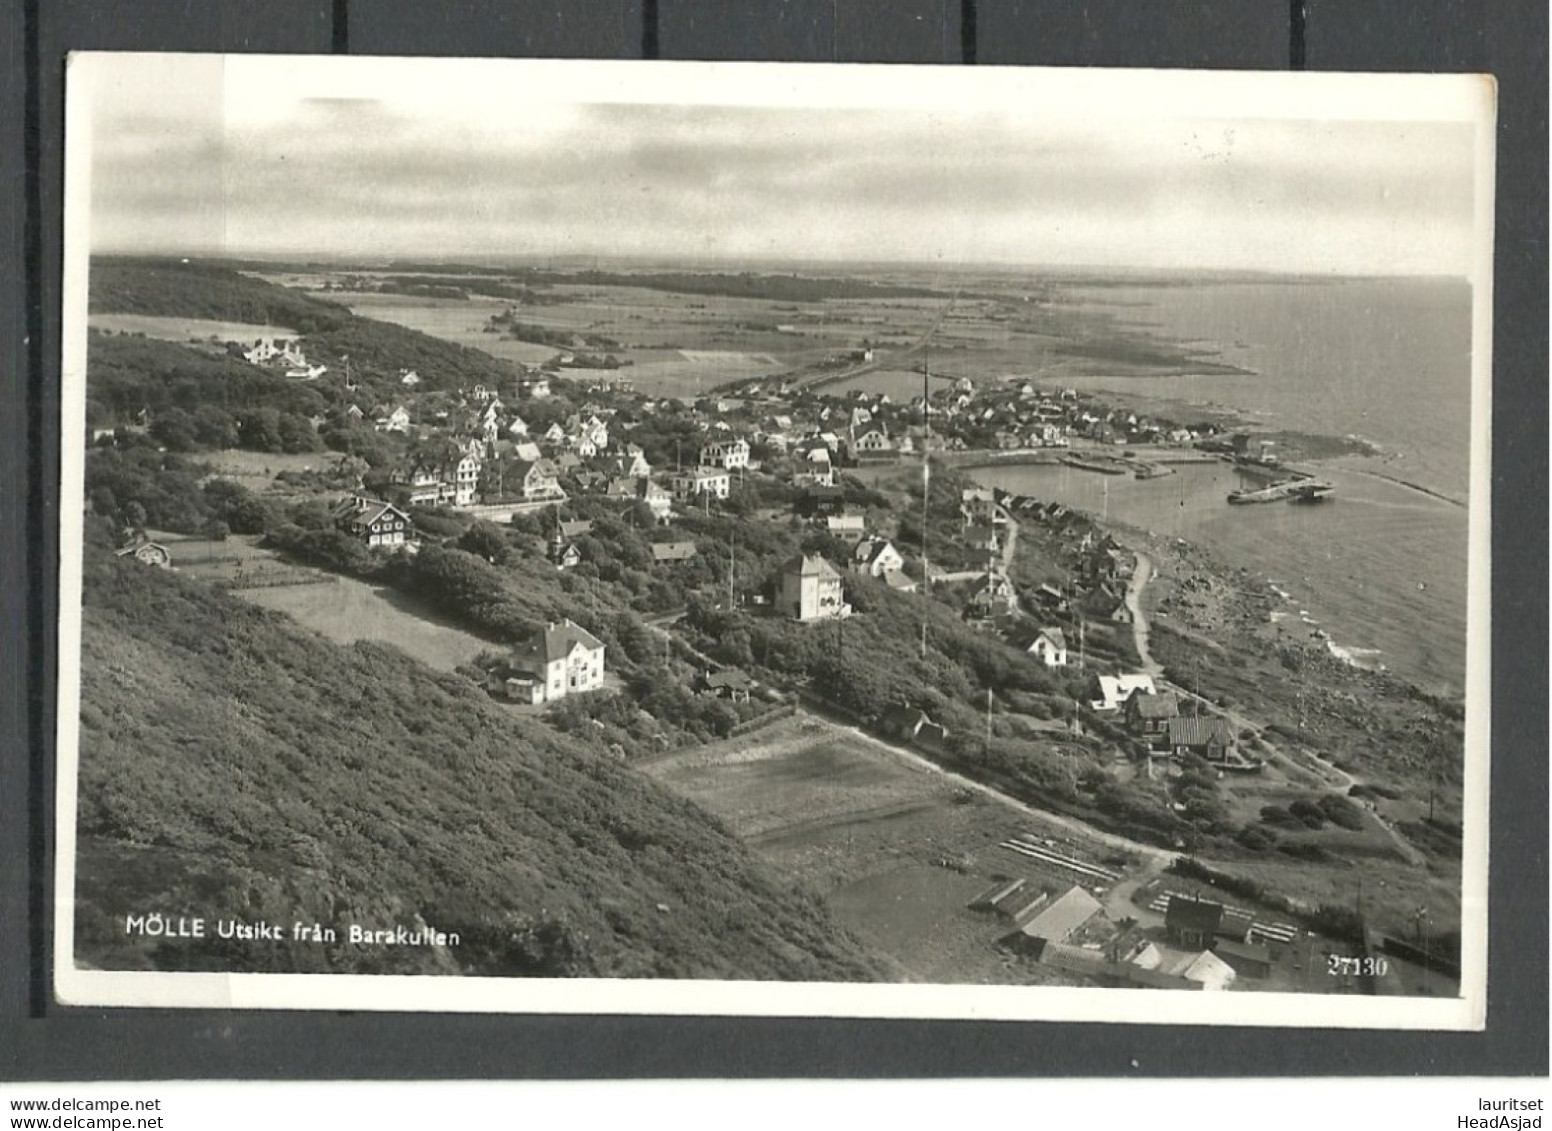 SWEDEN - MÖLLE - View From Barakullen - Photo Post Card, Unused - Suecia